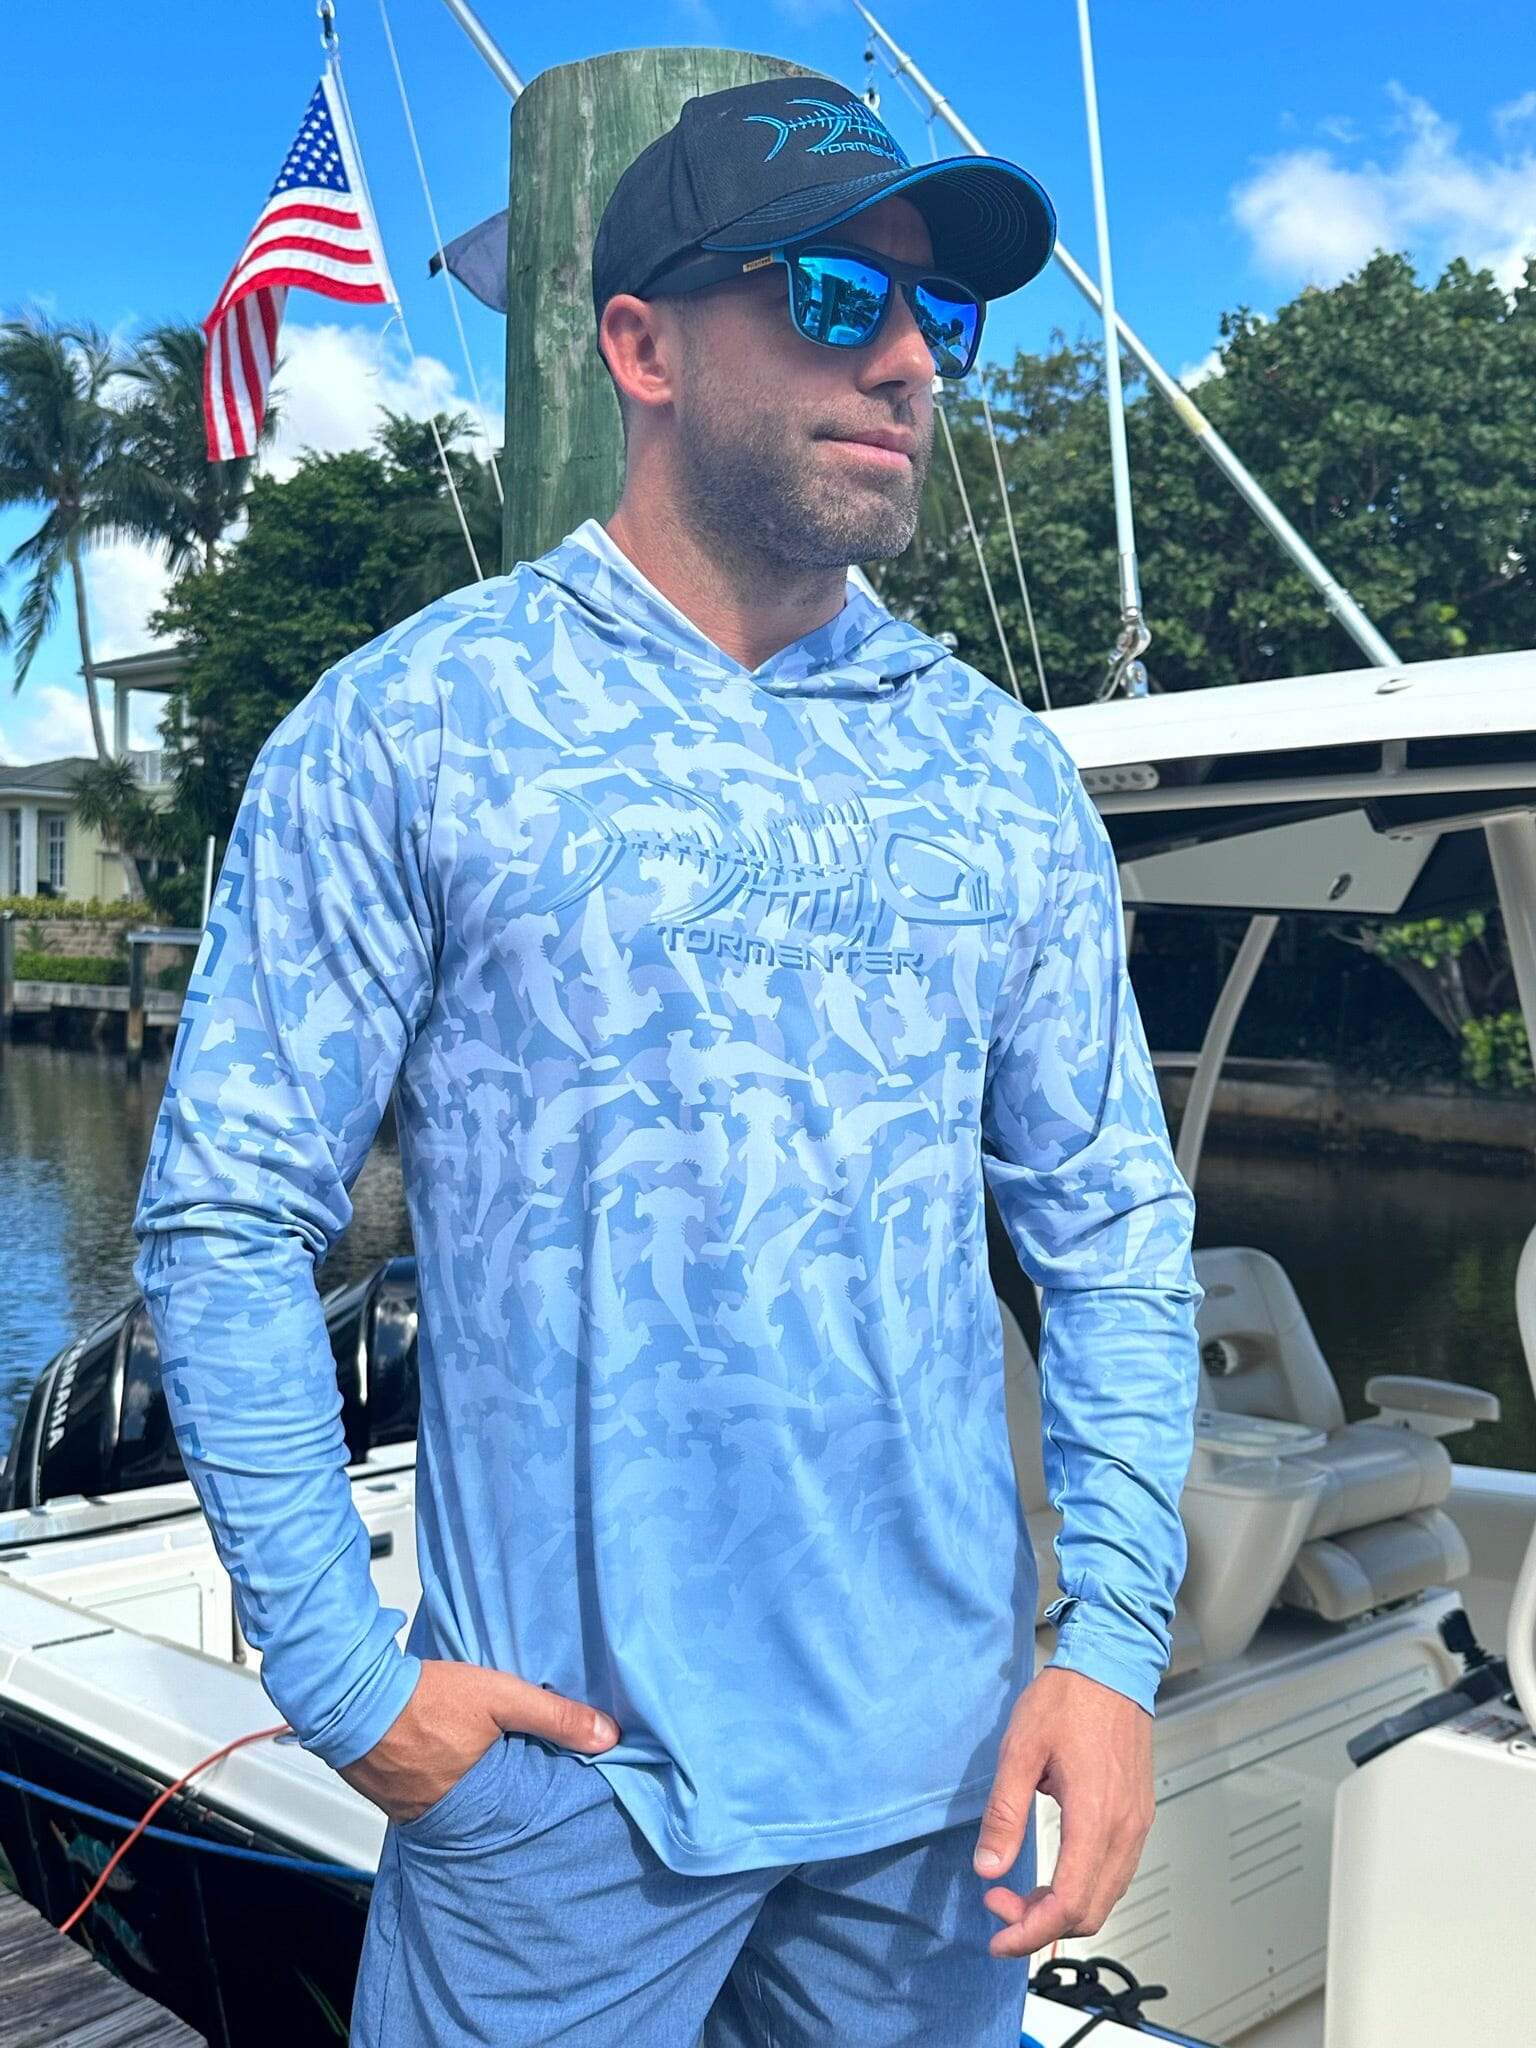 North Key Fishing Shirt  Fishing shirts, Long sleeve shirts, Fishing attire